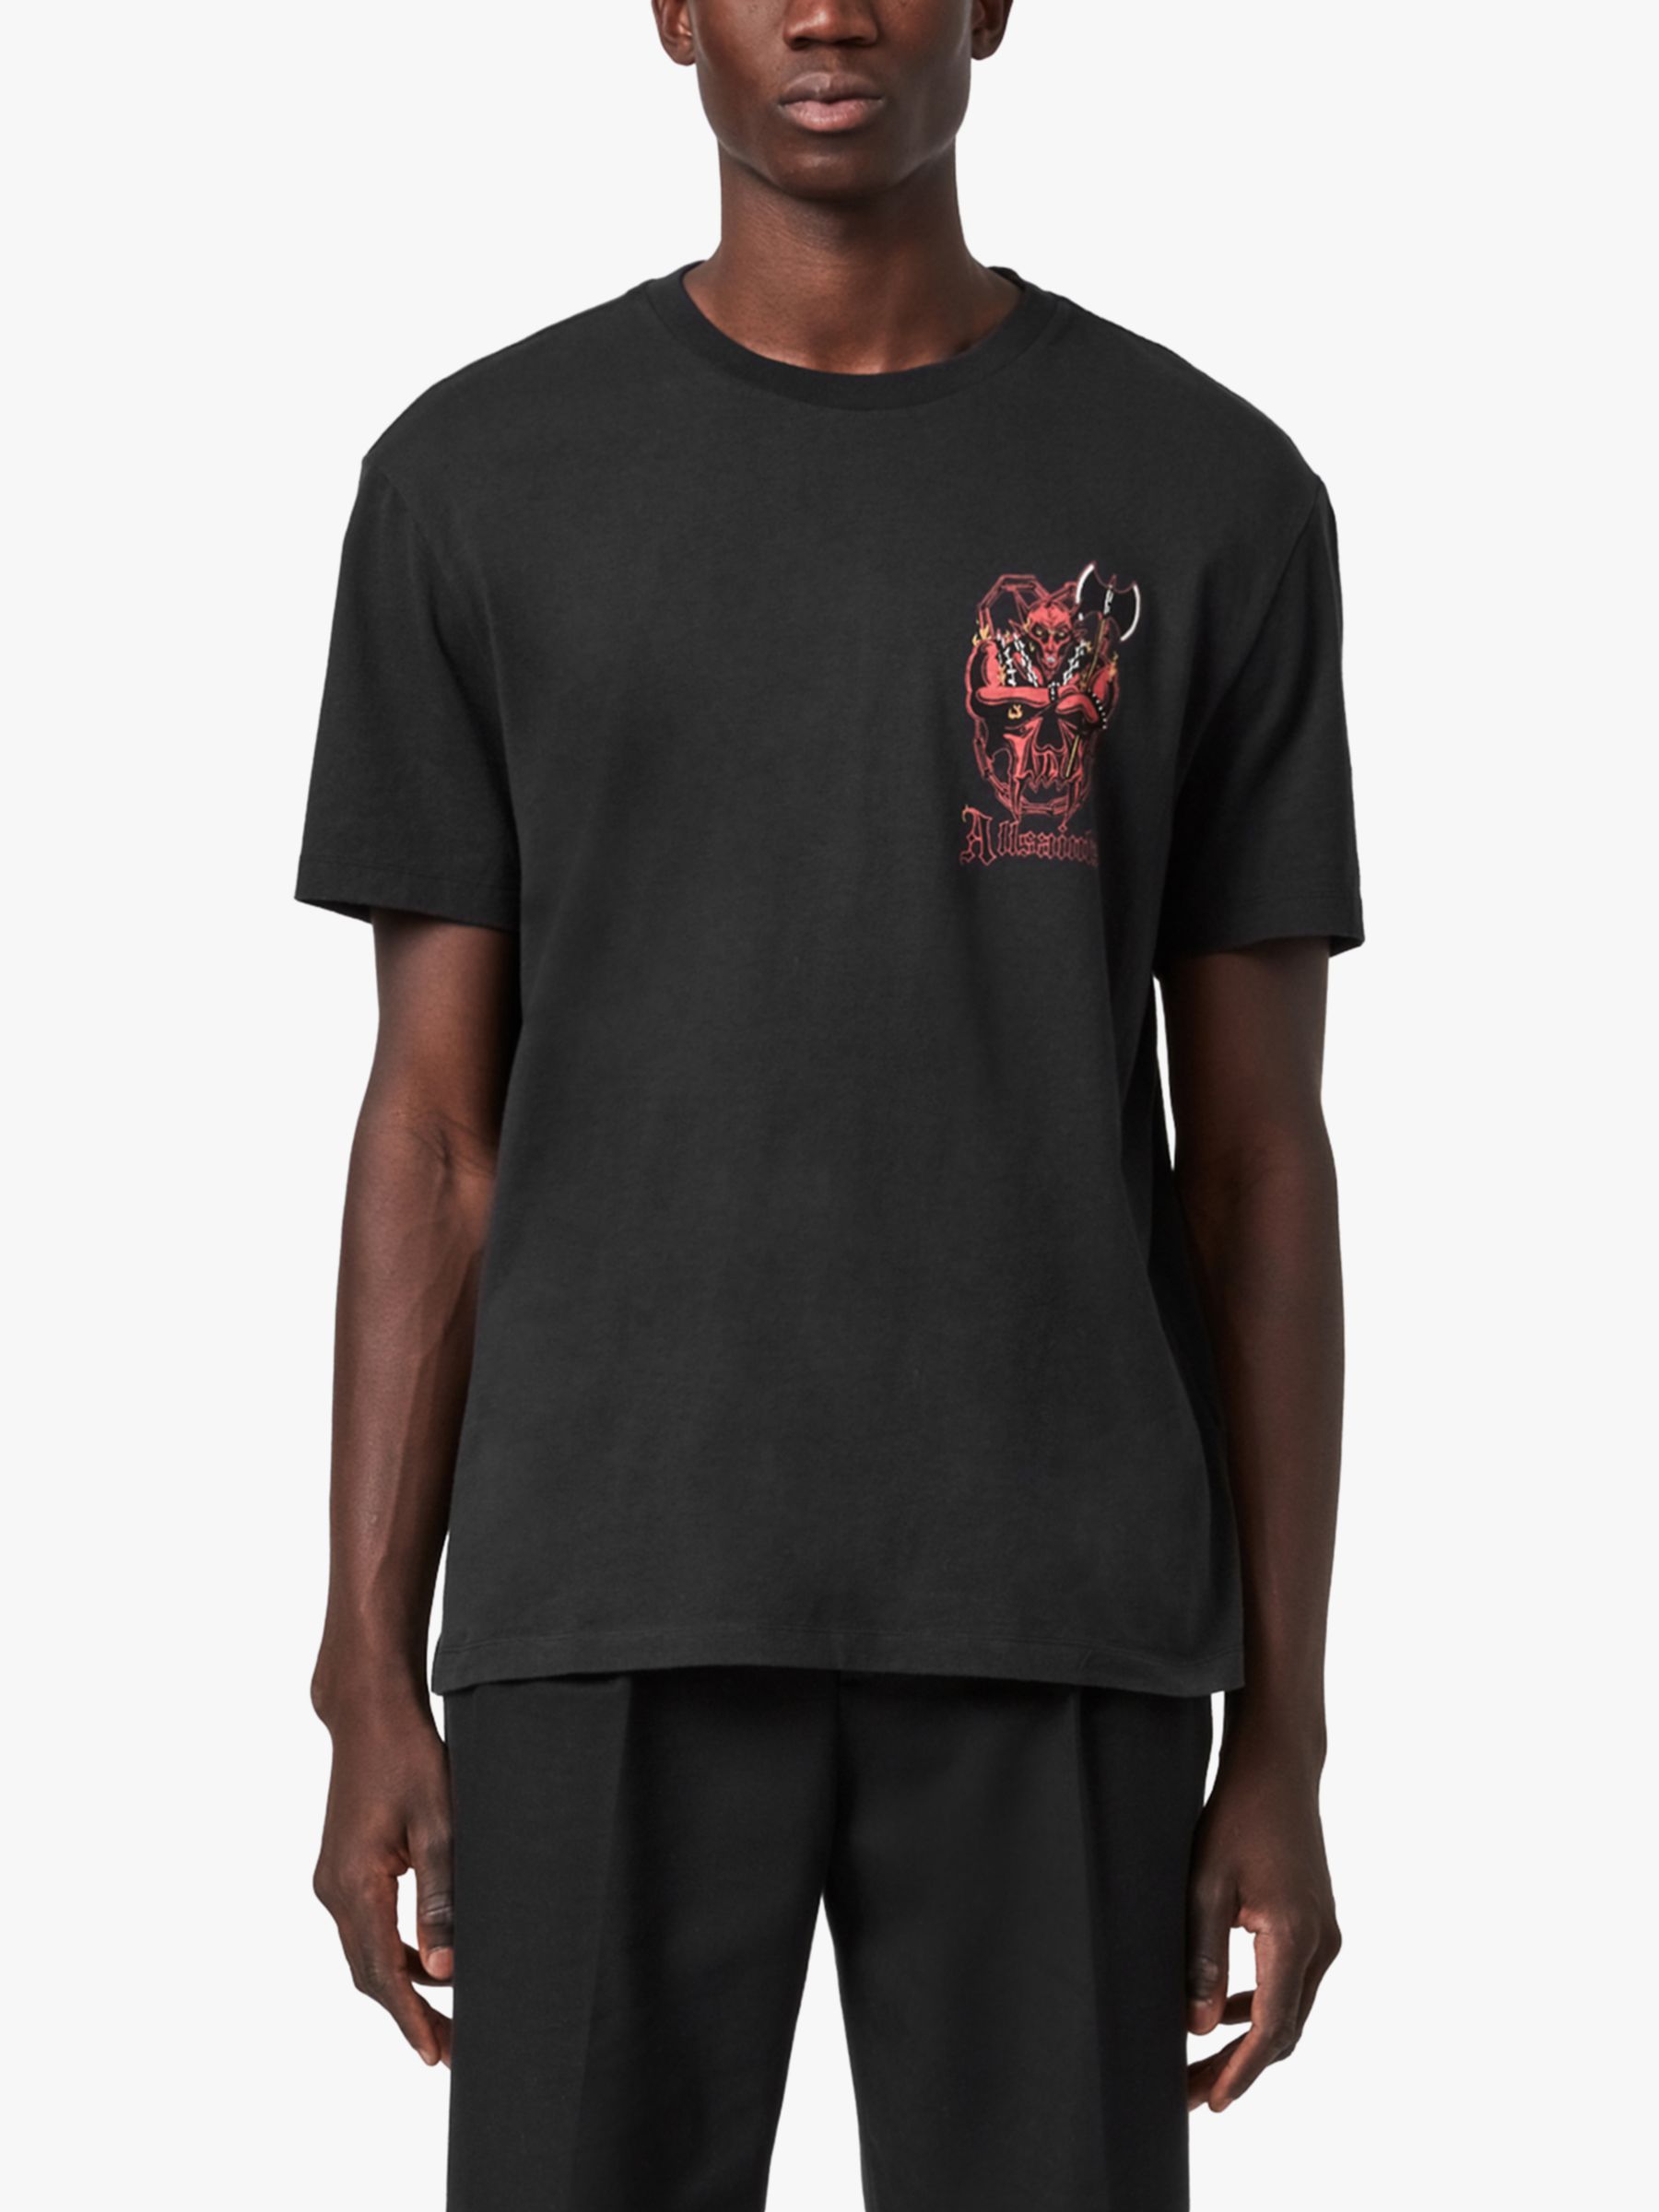 AllSaints Gatekeeper Graphic Logo T-Shirt, Black